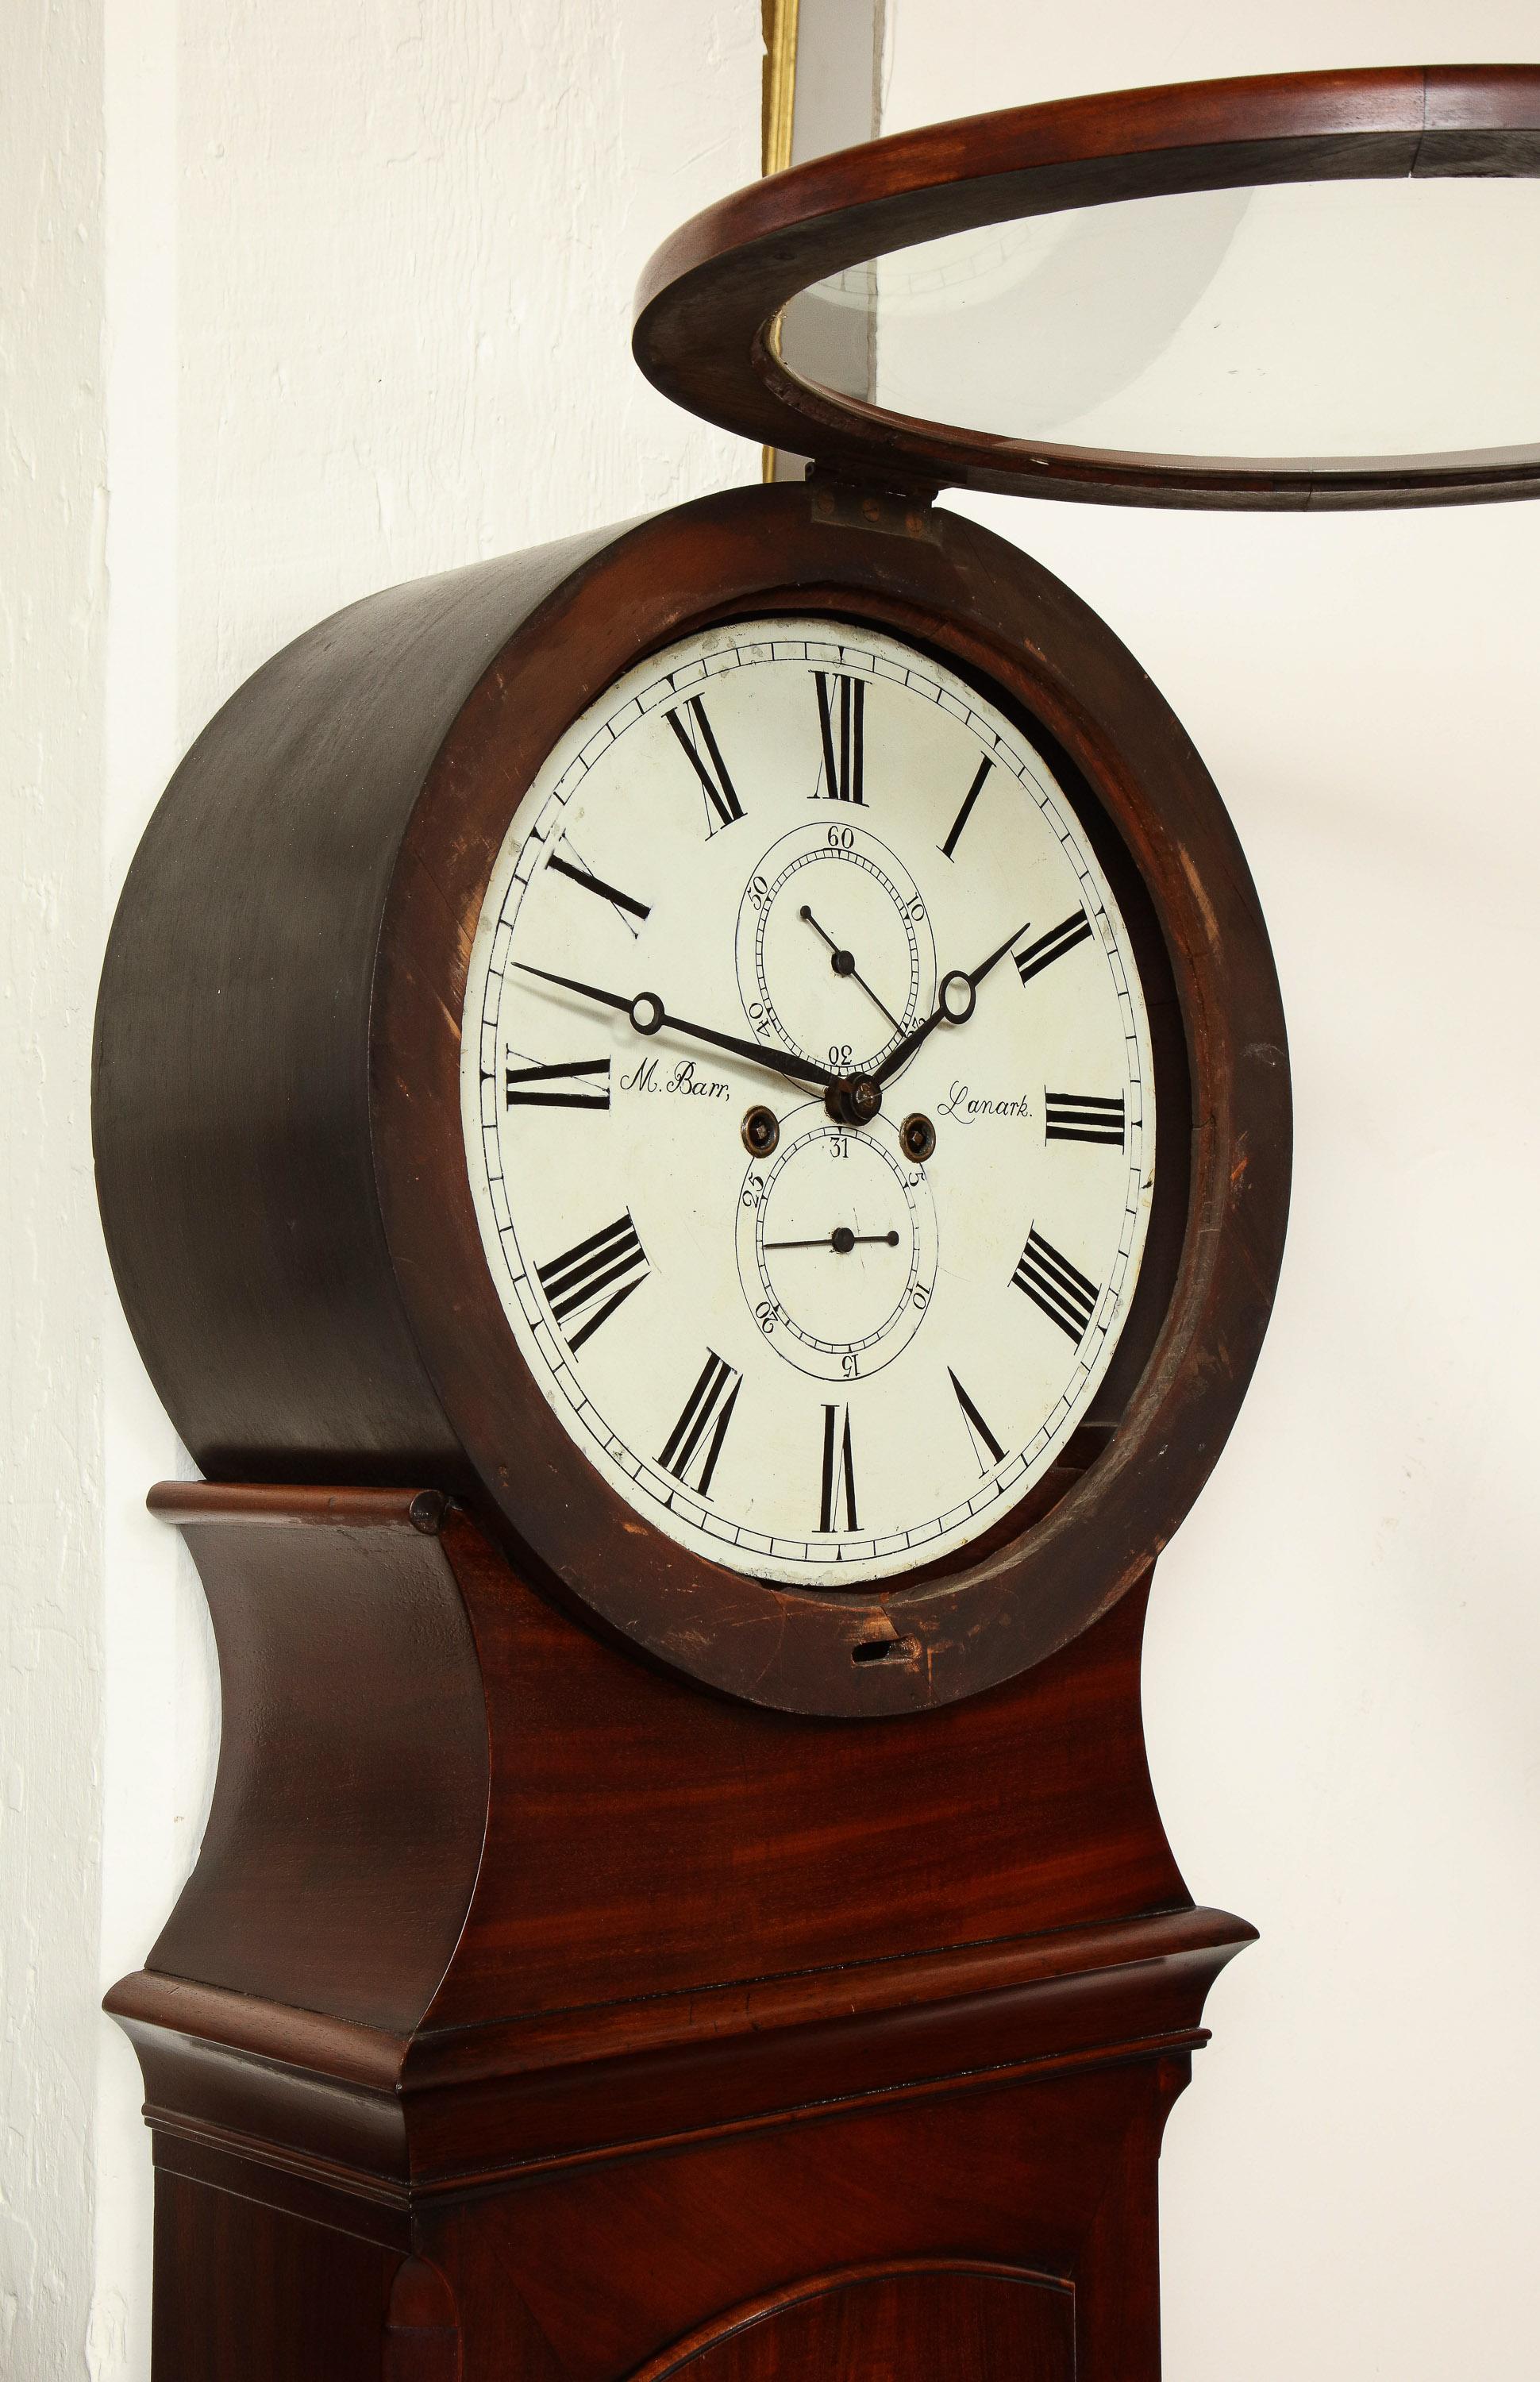 Exceptional Scottish Clock by M. Barr of Lanark Circa 1840- -1850 9